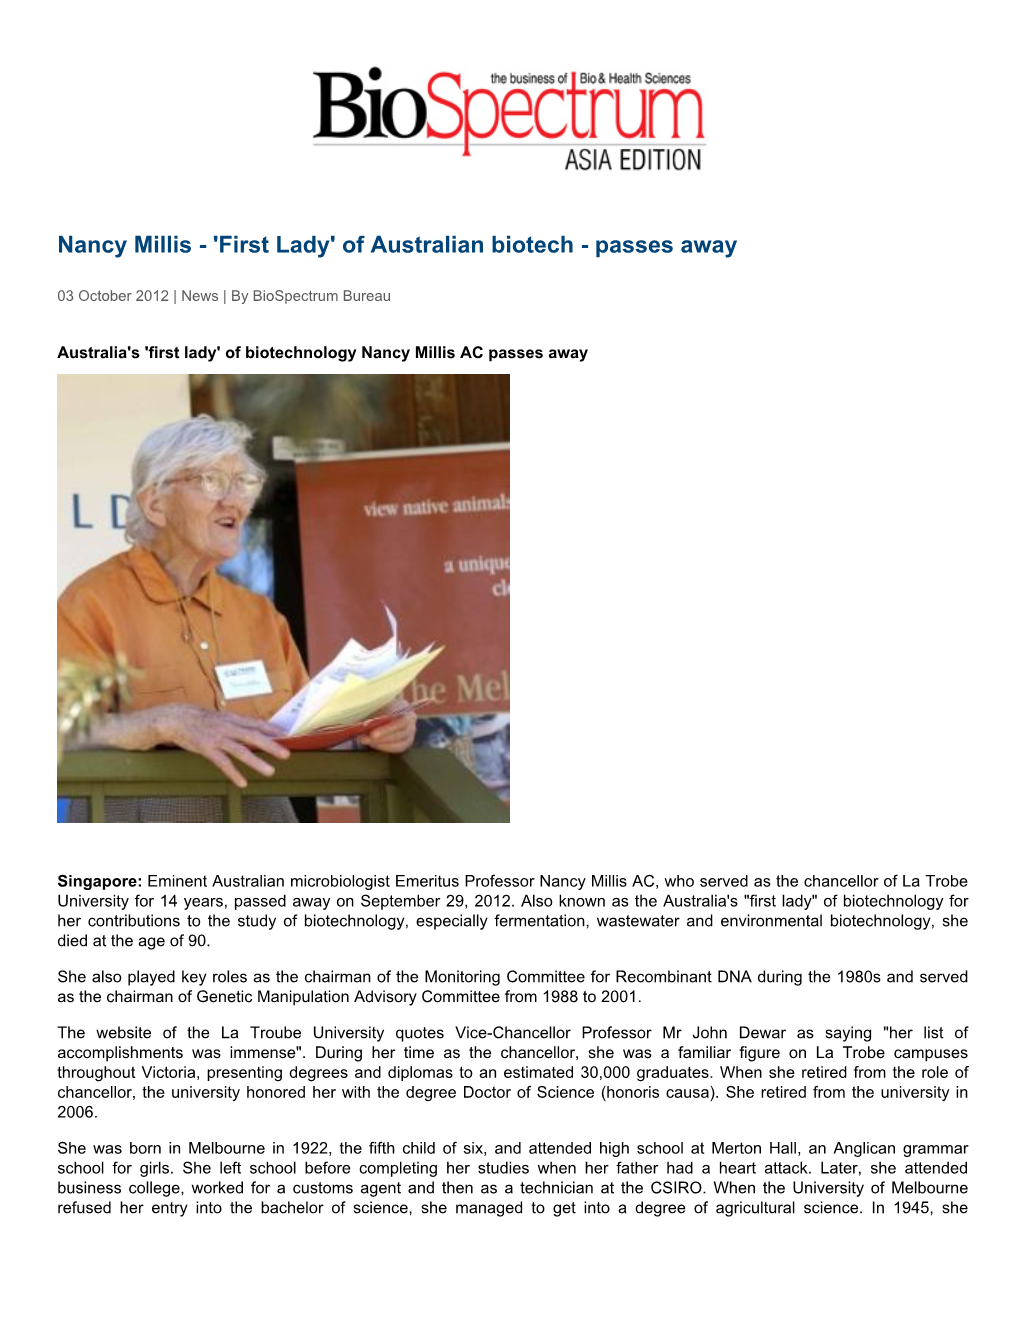 Nancy Millis - 'First Lady' of Australian Biotech - Passes Away